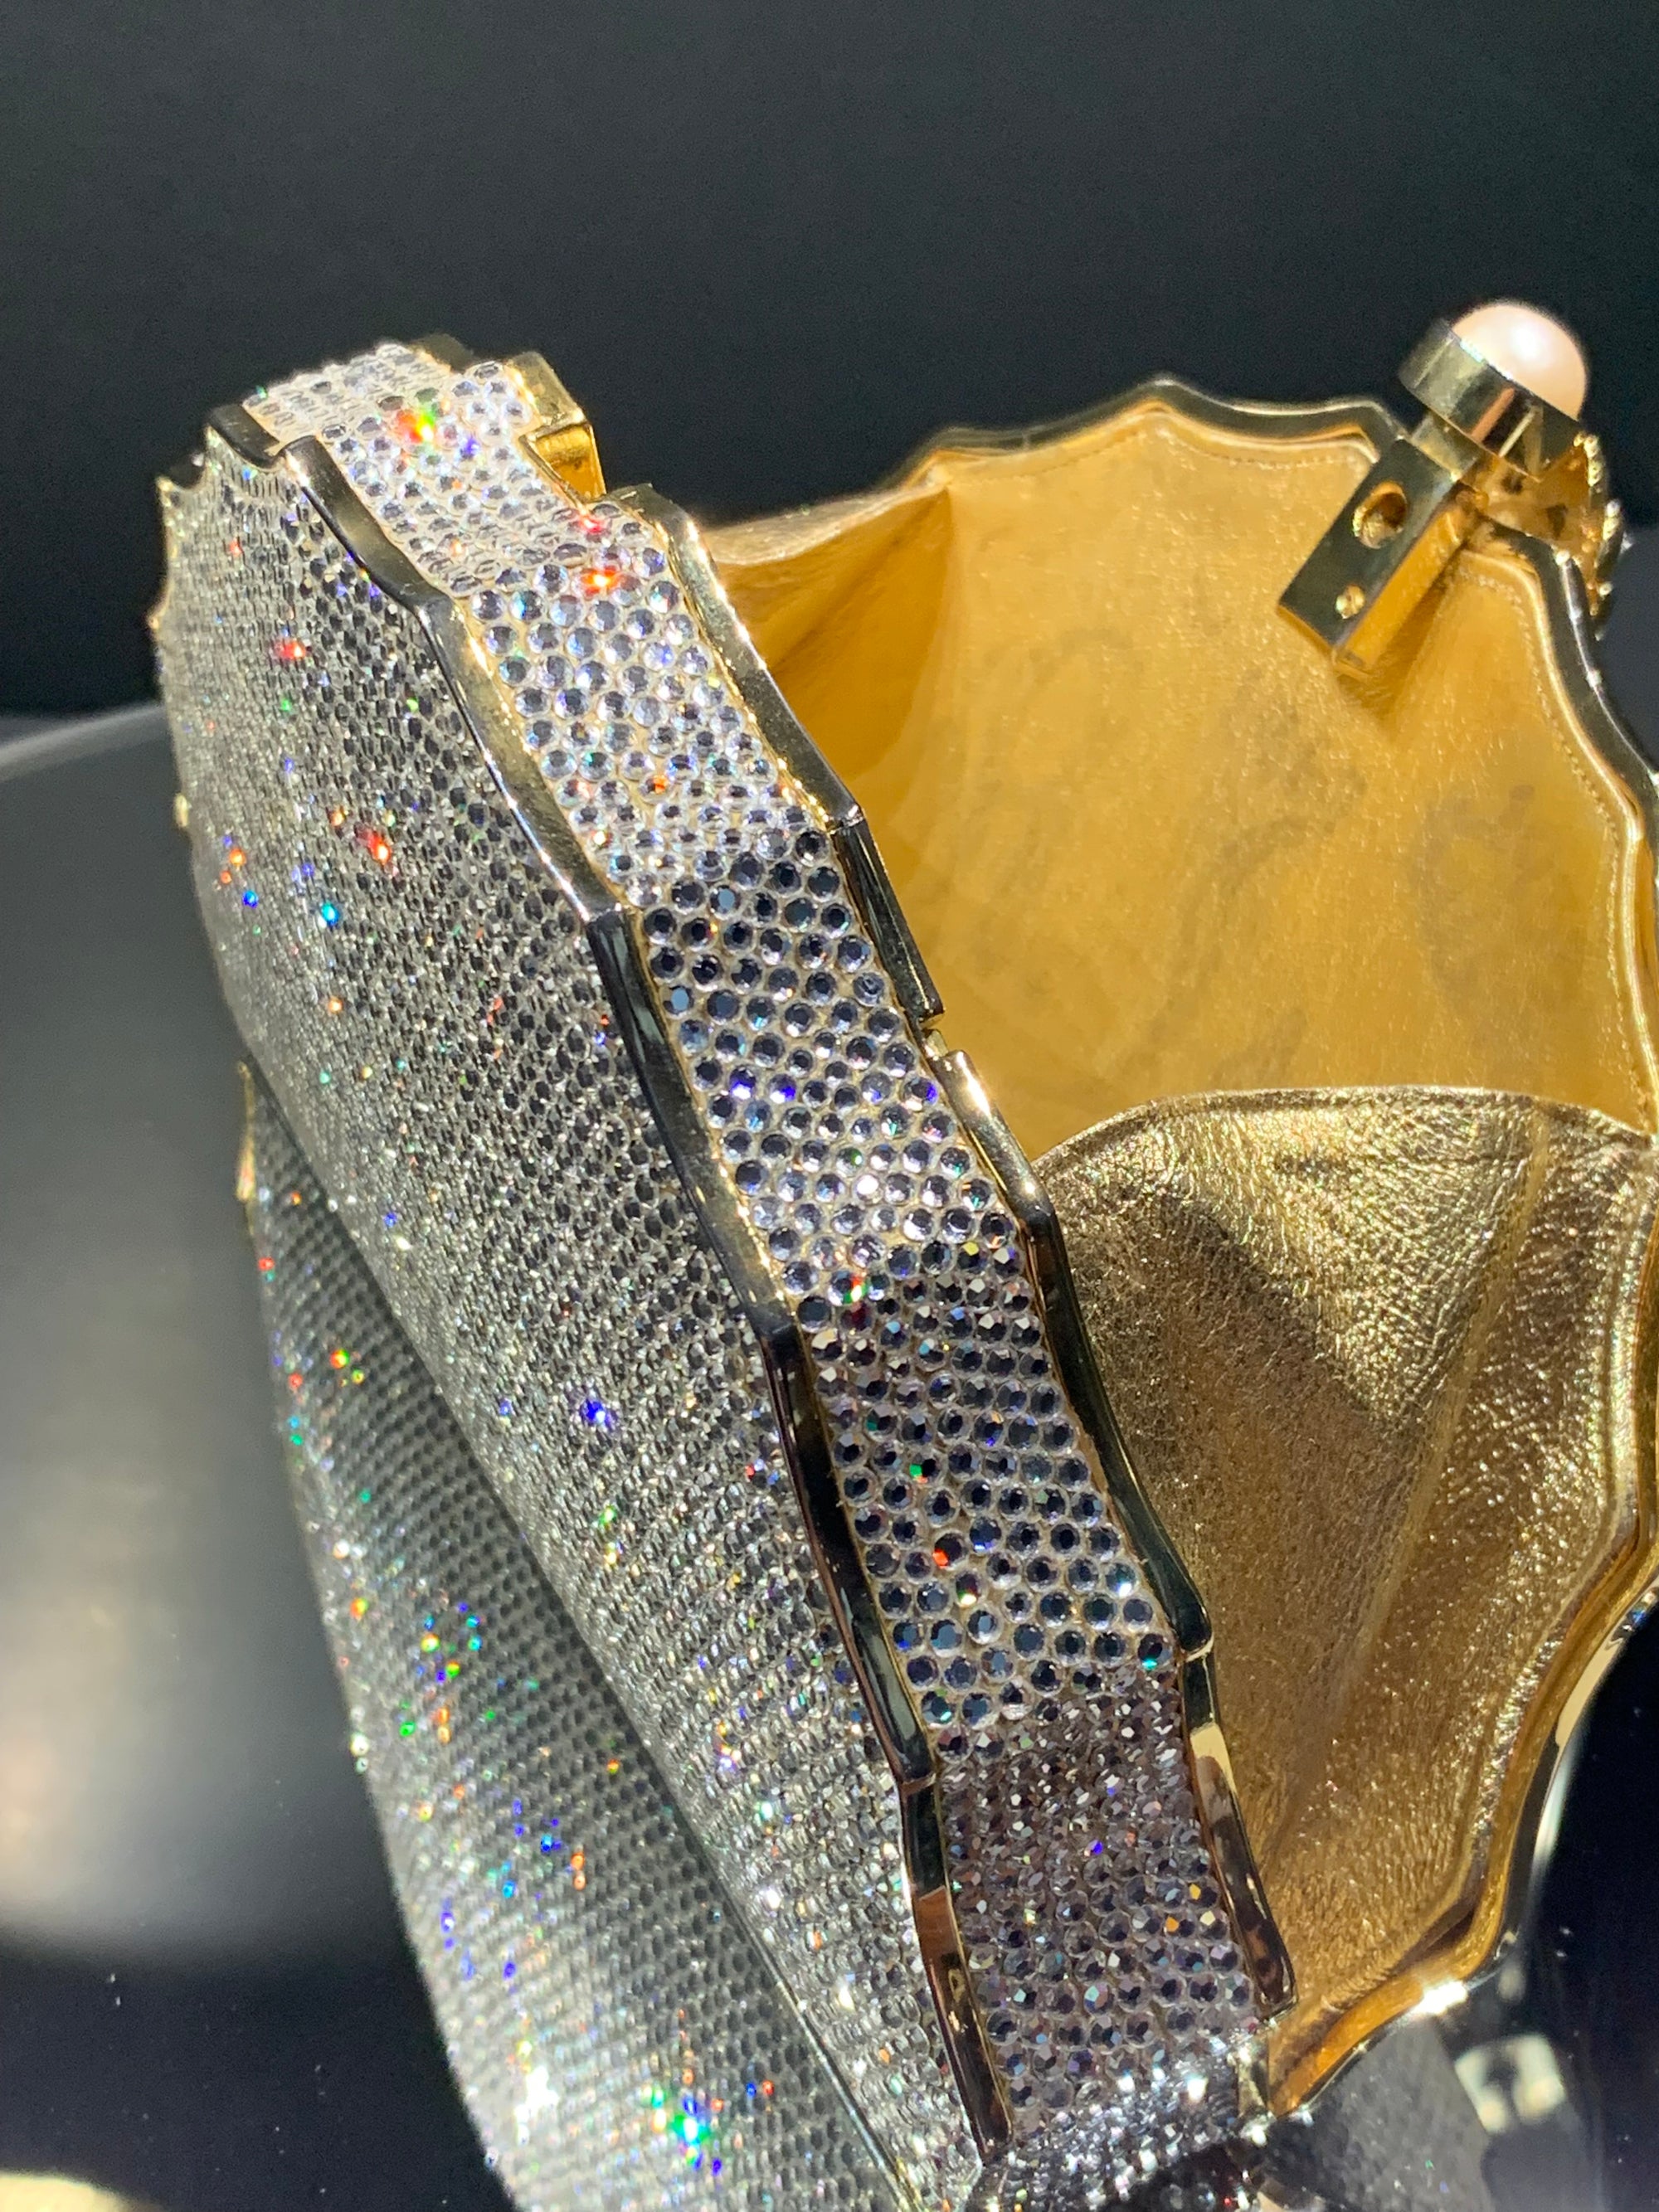 Judith Leiber silver Crystal-Embellished Peony Clutch Bag